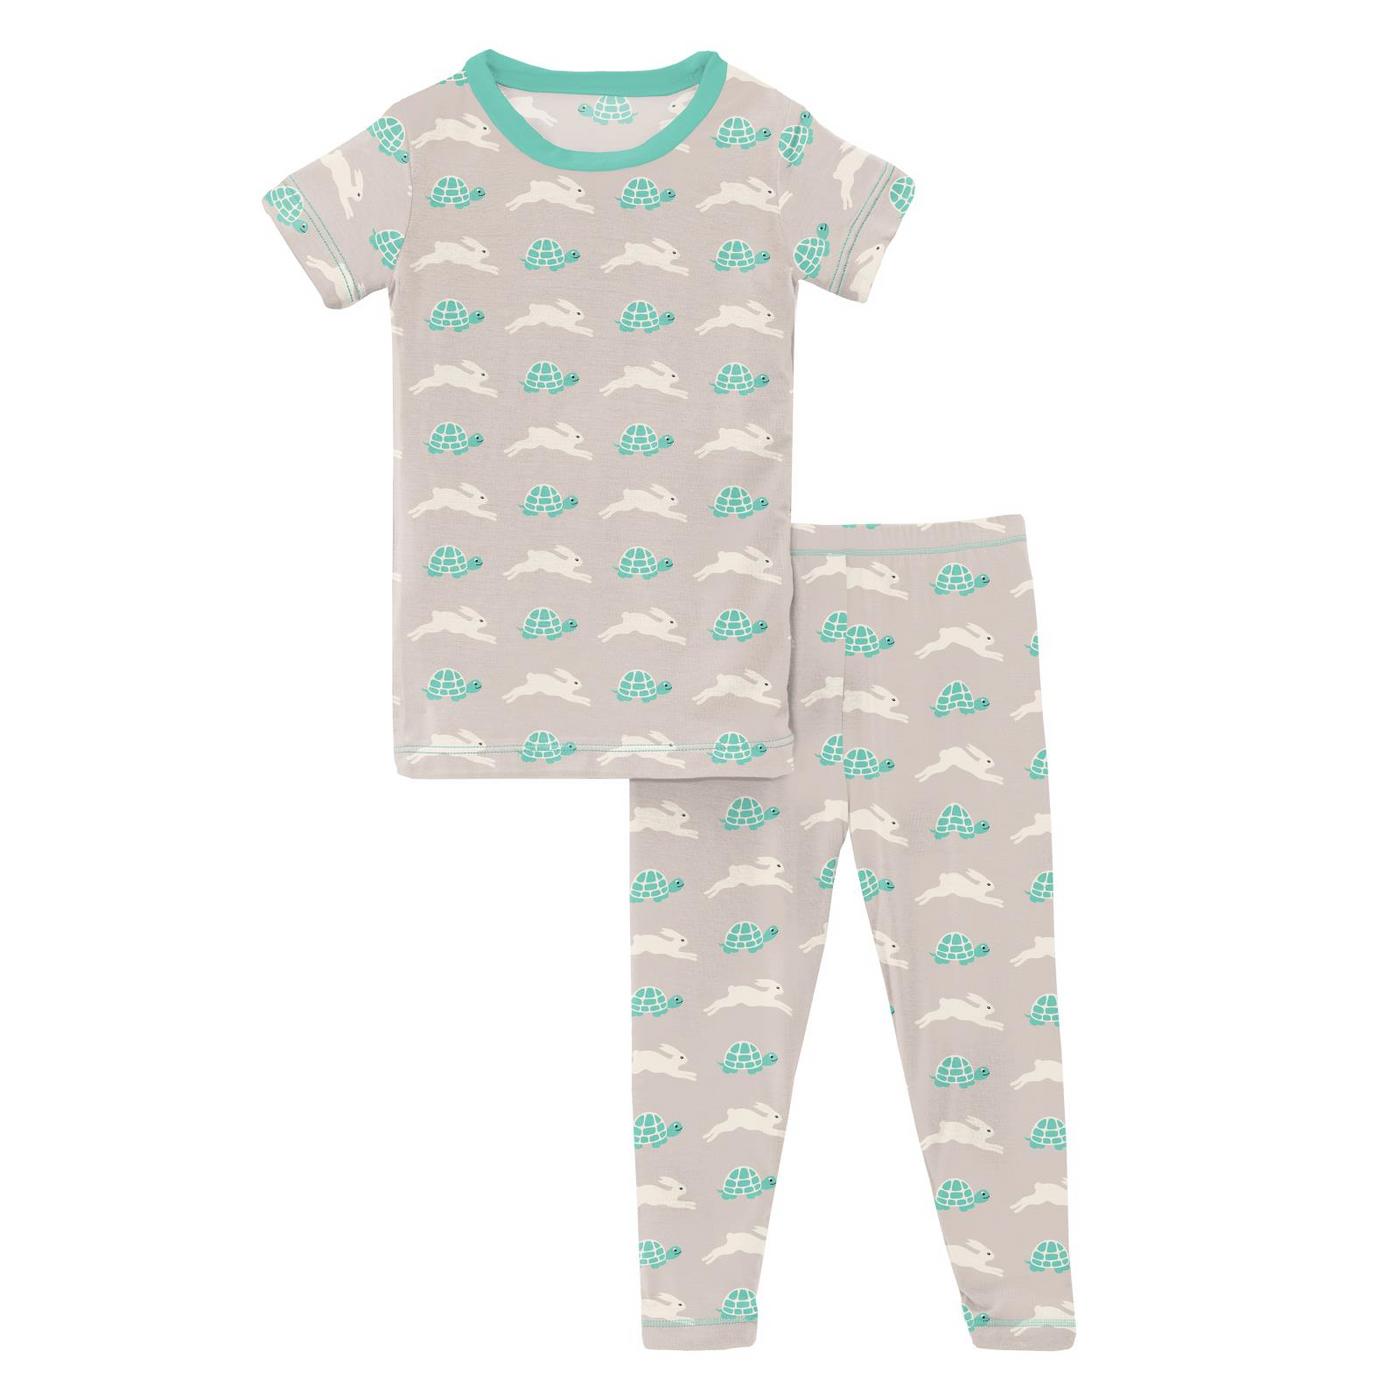 Kickee Pants Pajama Set: Latte Tortoise and Hare